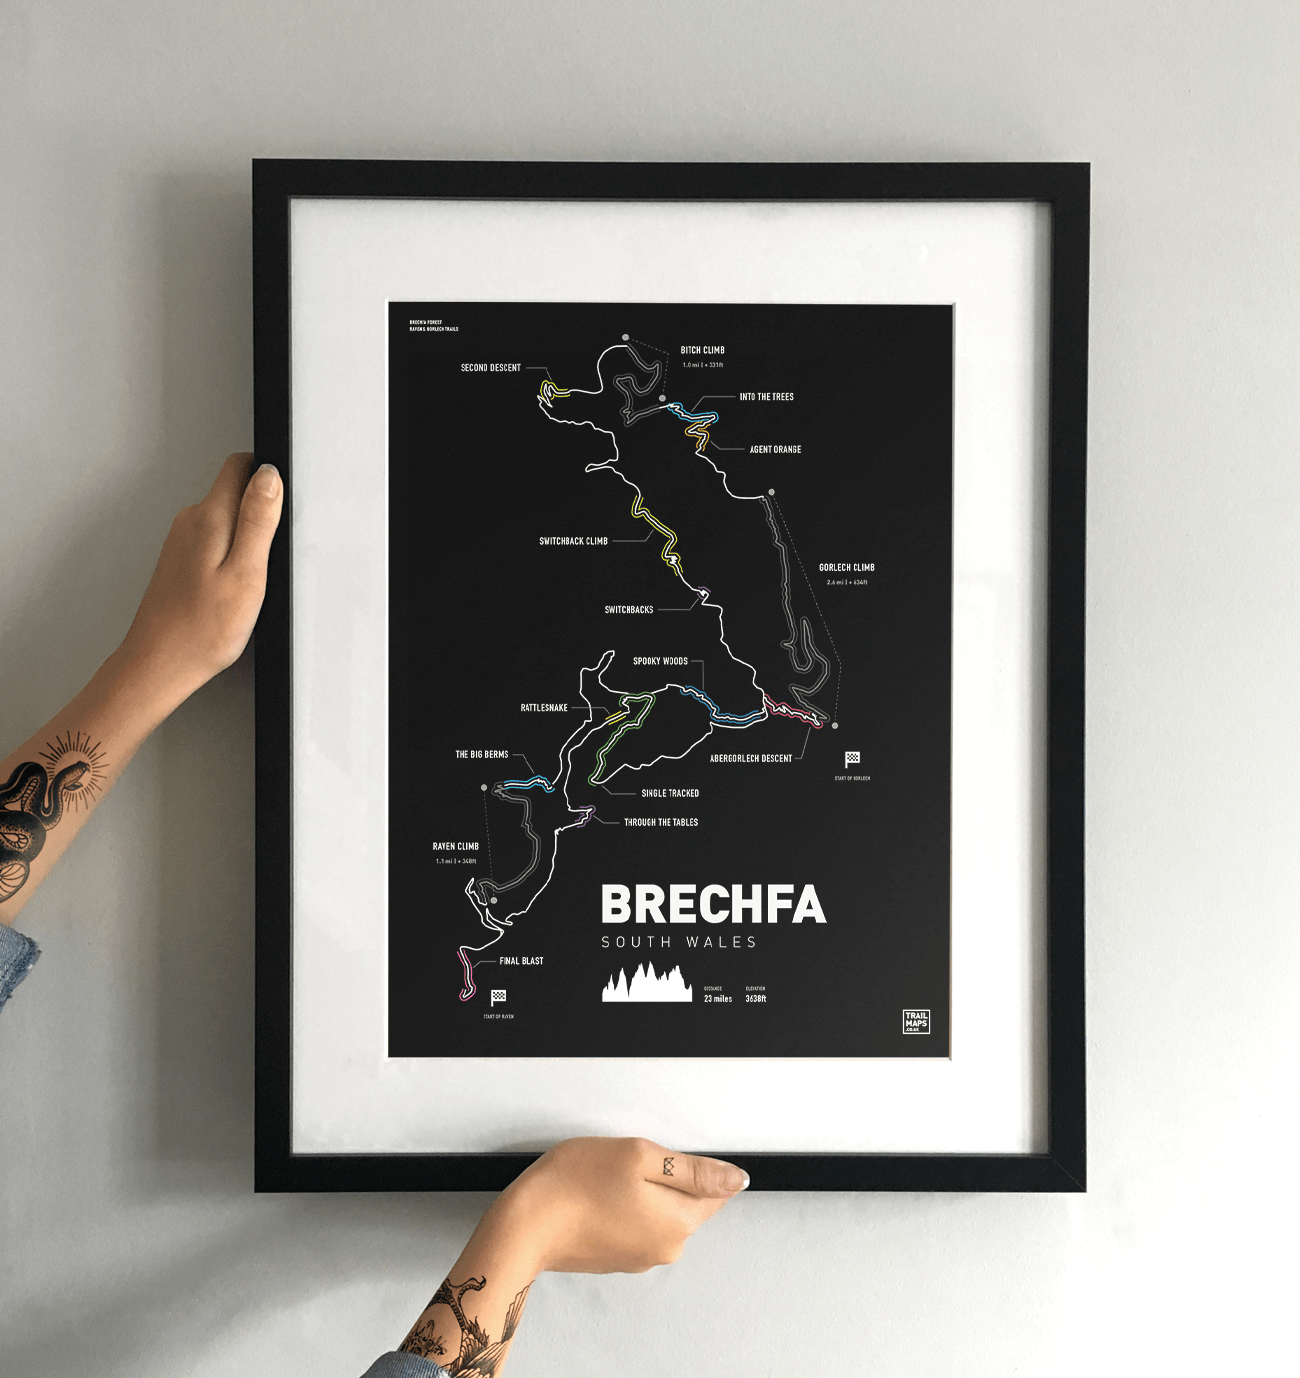 Brechfa Forest - TrailMaps.co.uk